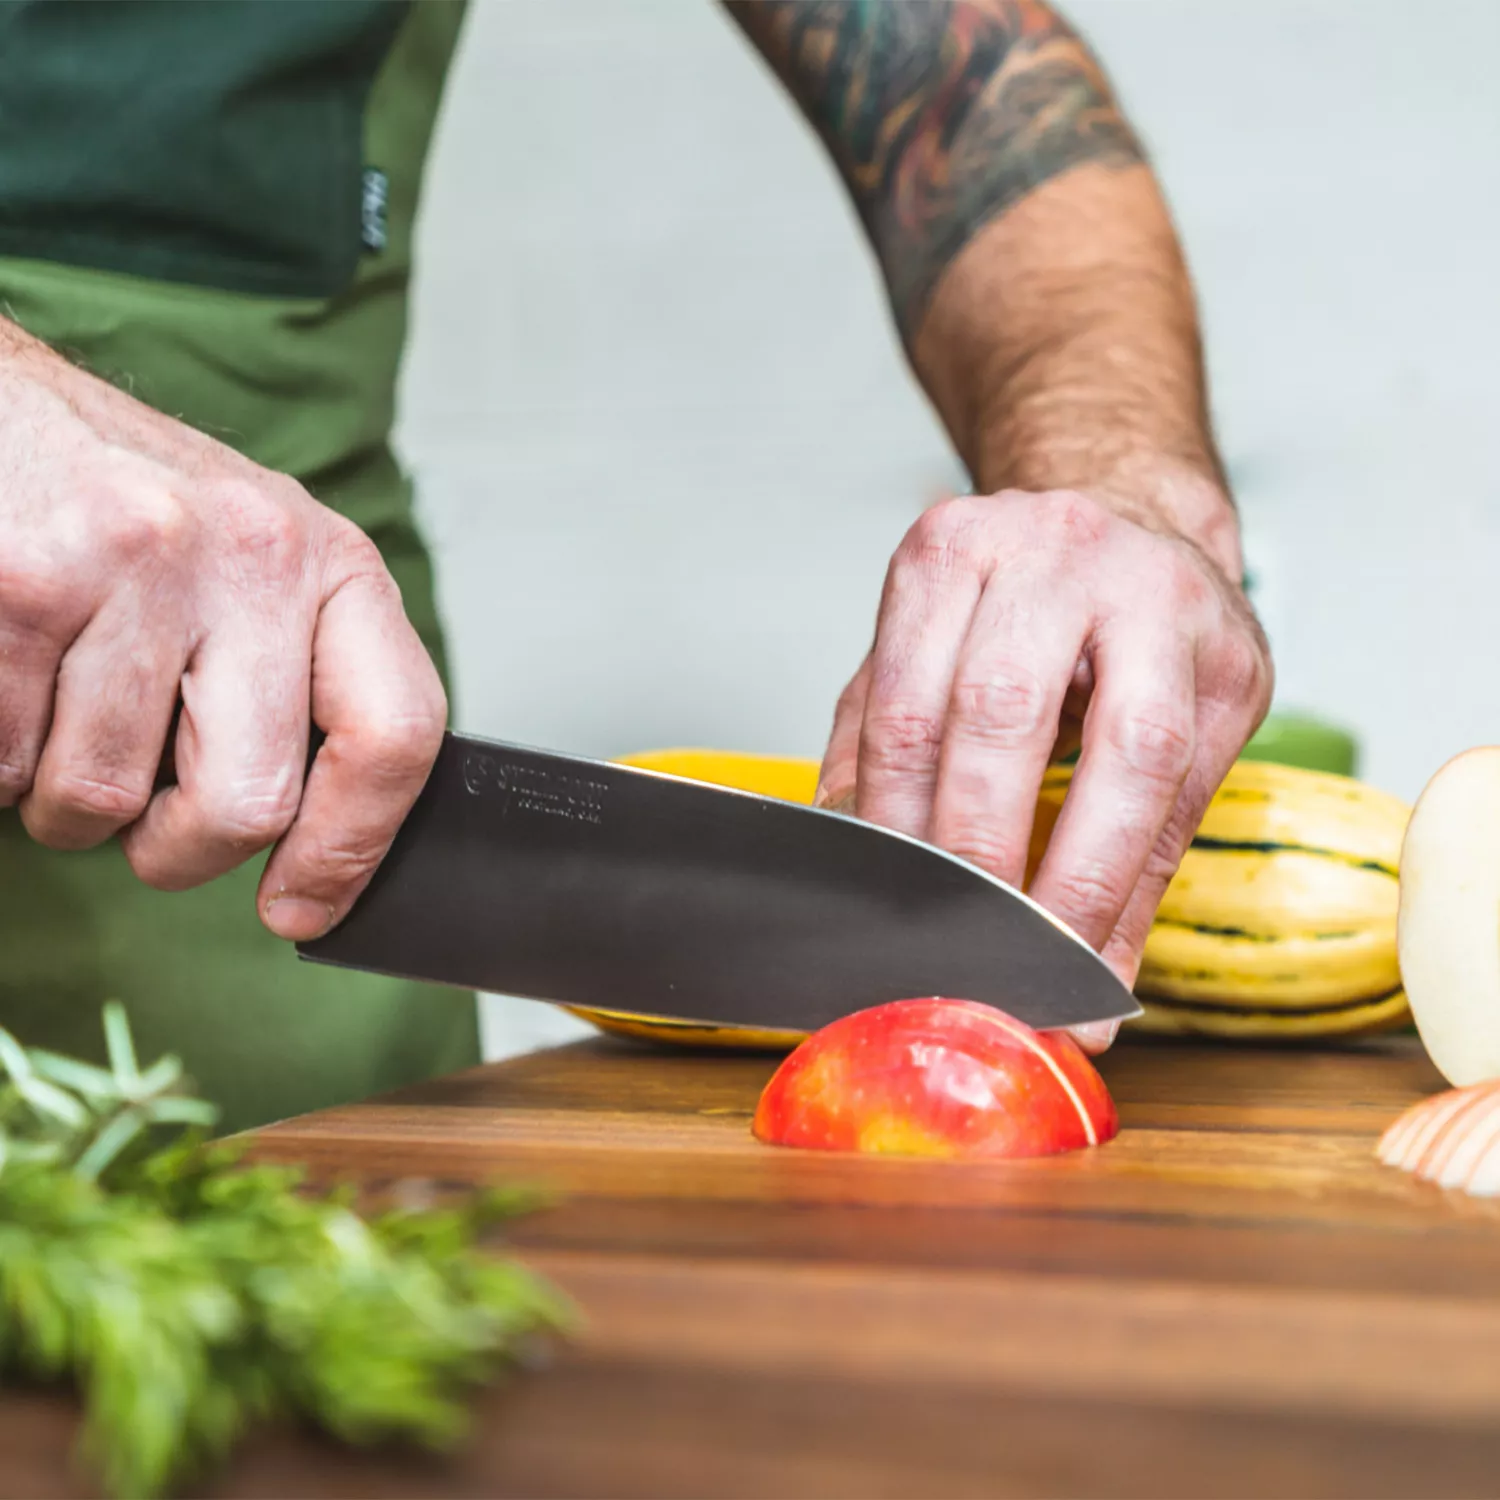 Kitchen Ceramic Knife Set with Sheaths, Professional Knife Set with 6 Chef  Knife, 5 Utility Knife, 4 Fruit Knife, 3 Paring Knife and One Peeler